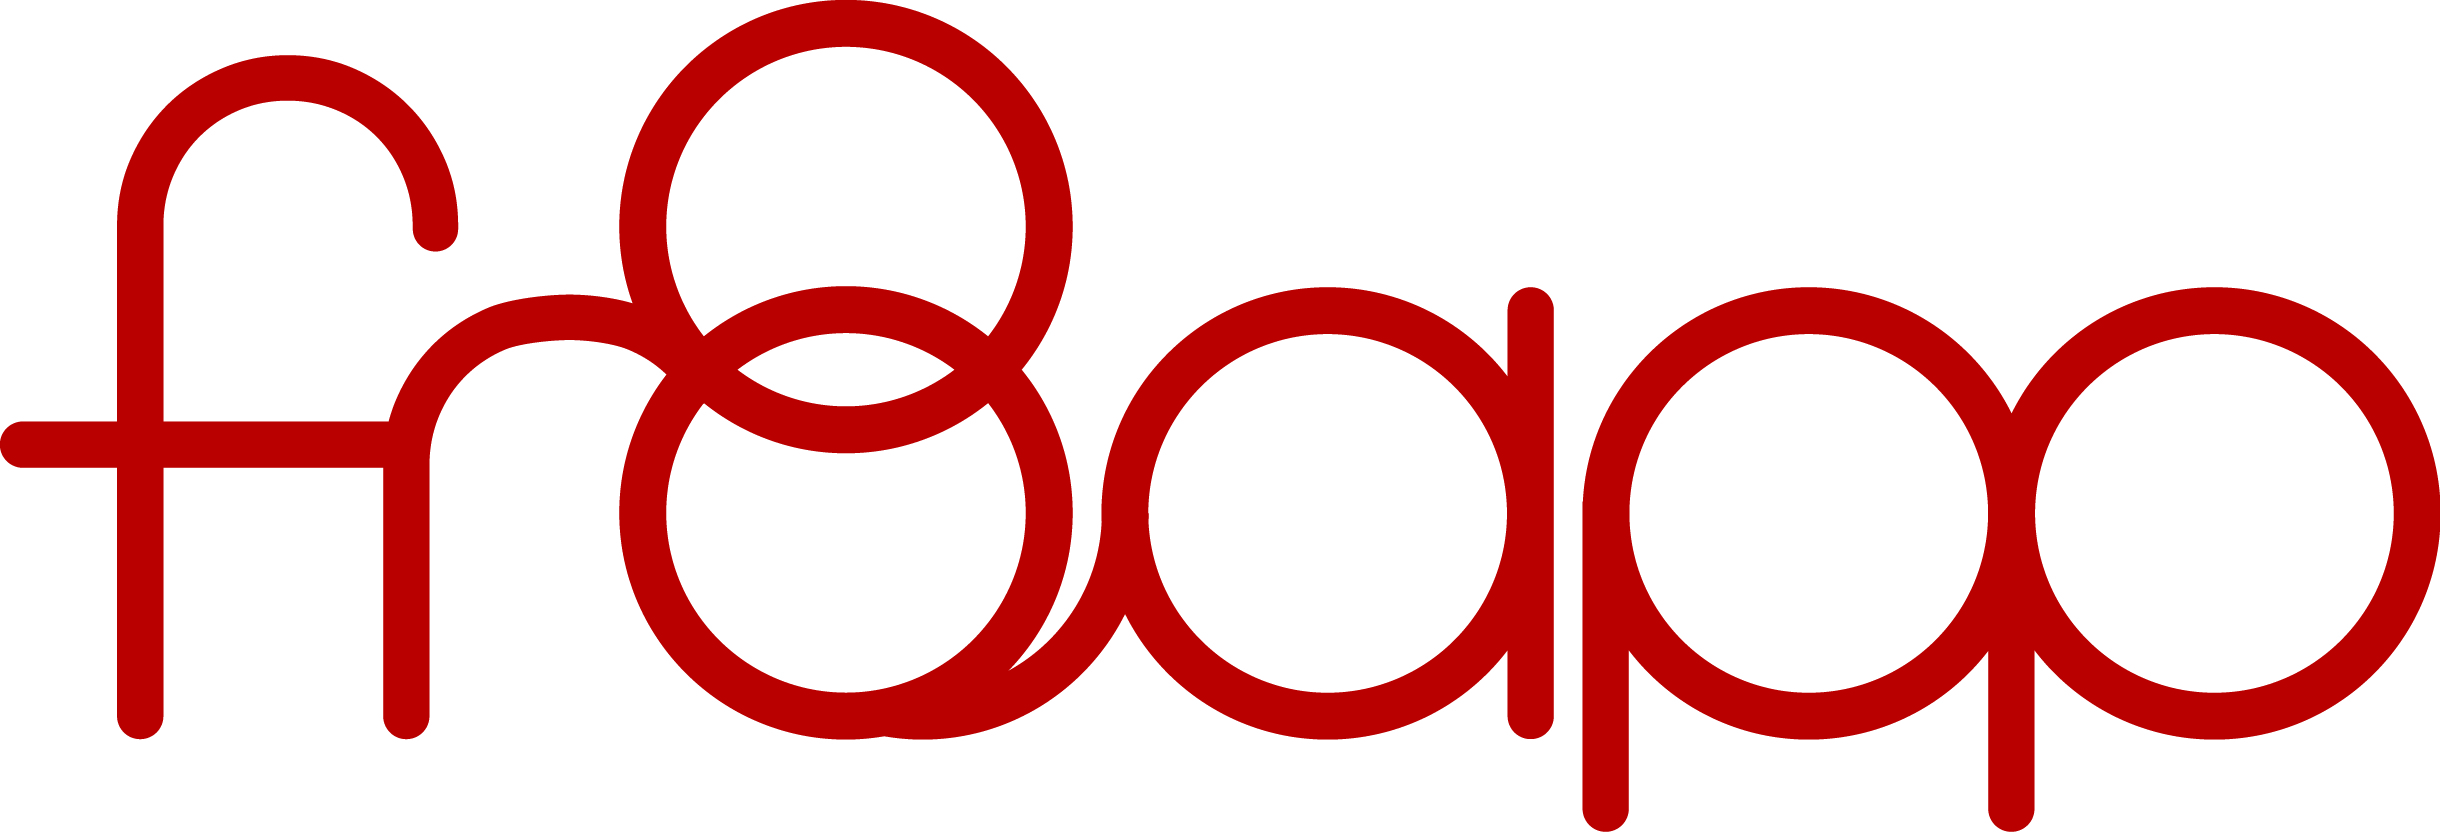 FR8APP-logo-red.jpg